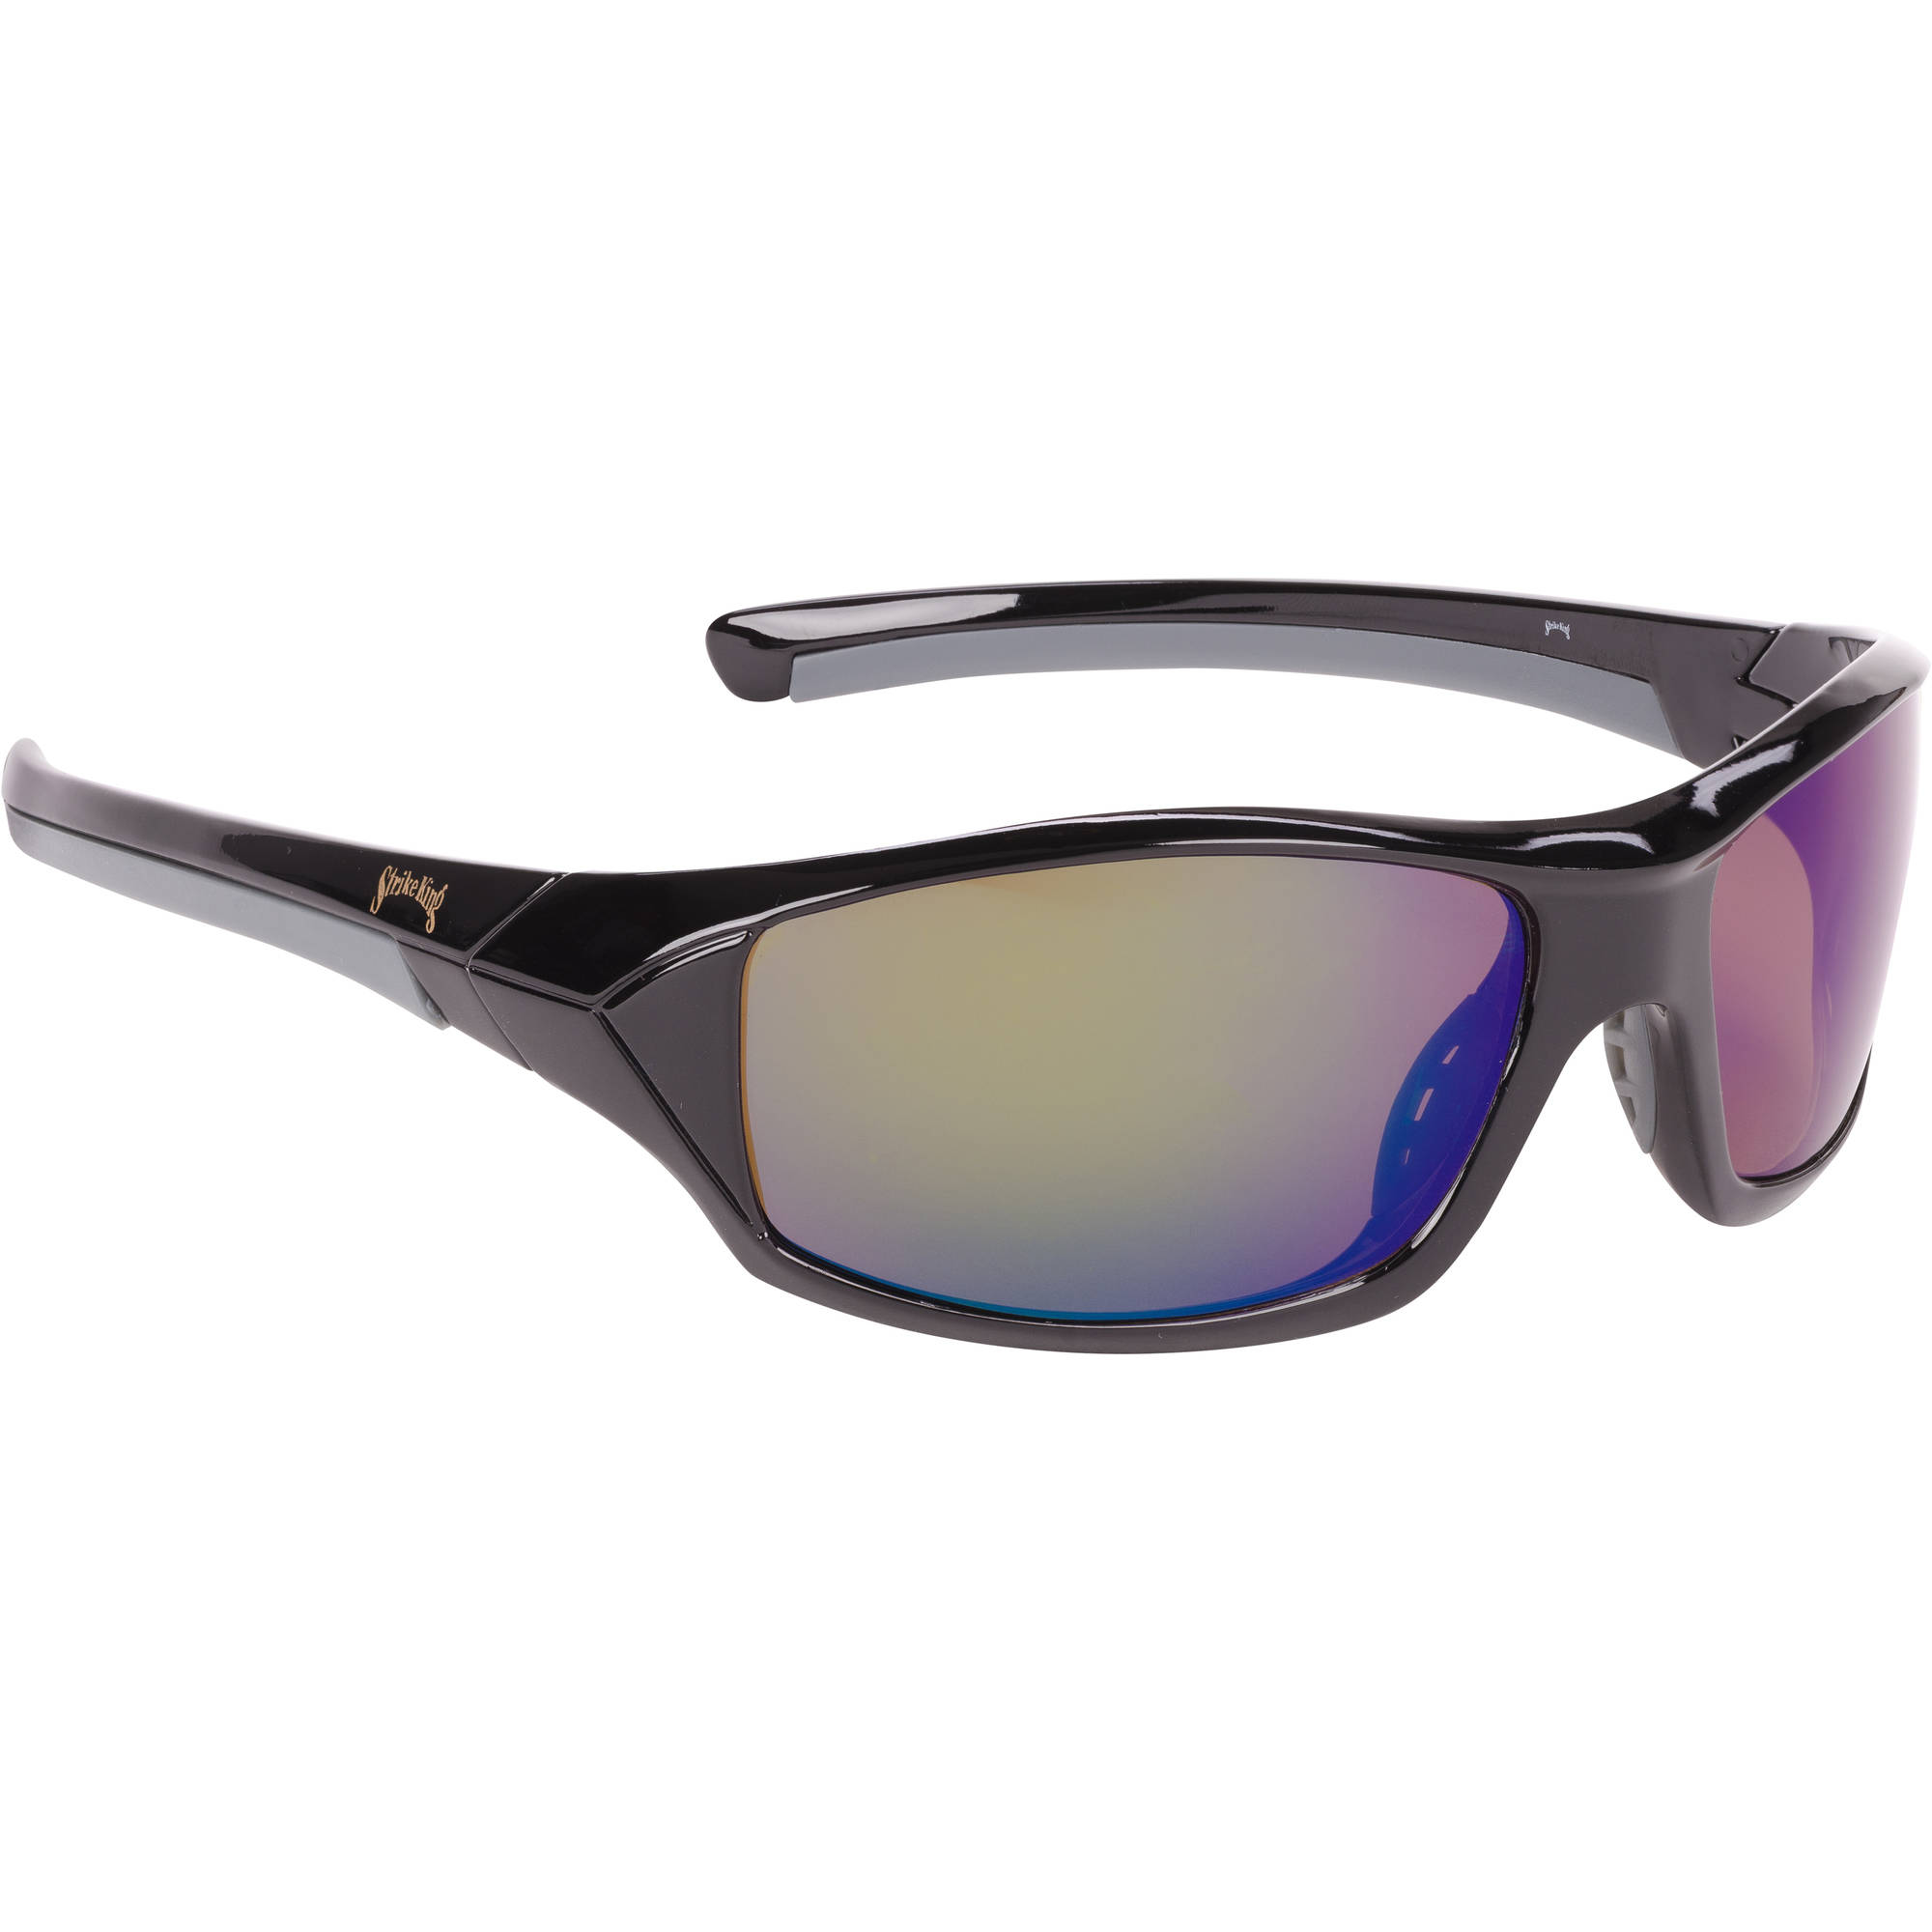 Strike King Polarized Performance Sunglasses Shiny Black Frame with Blue Mirror Lens Full Rim Frame, Male Adult - image 1 of 7